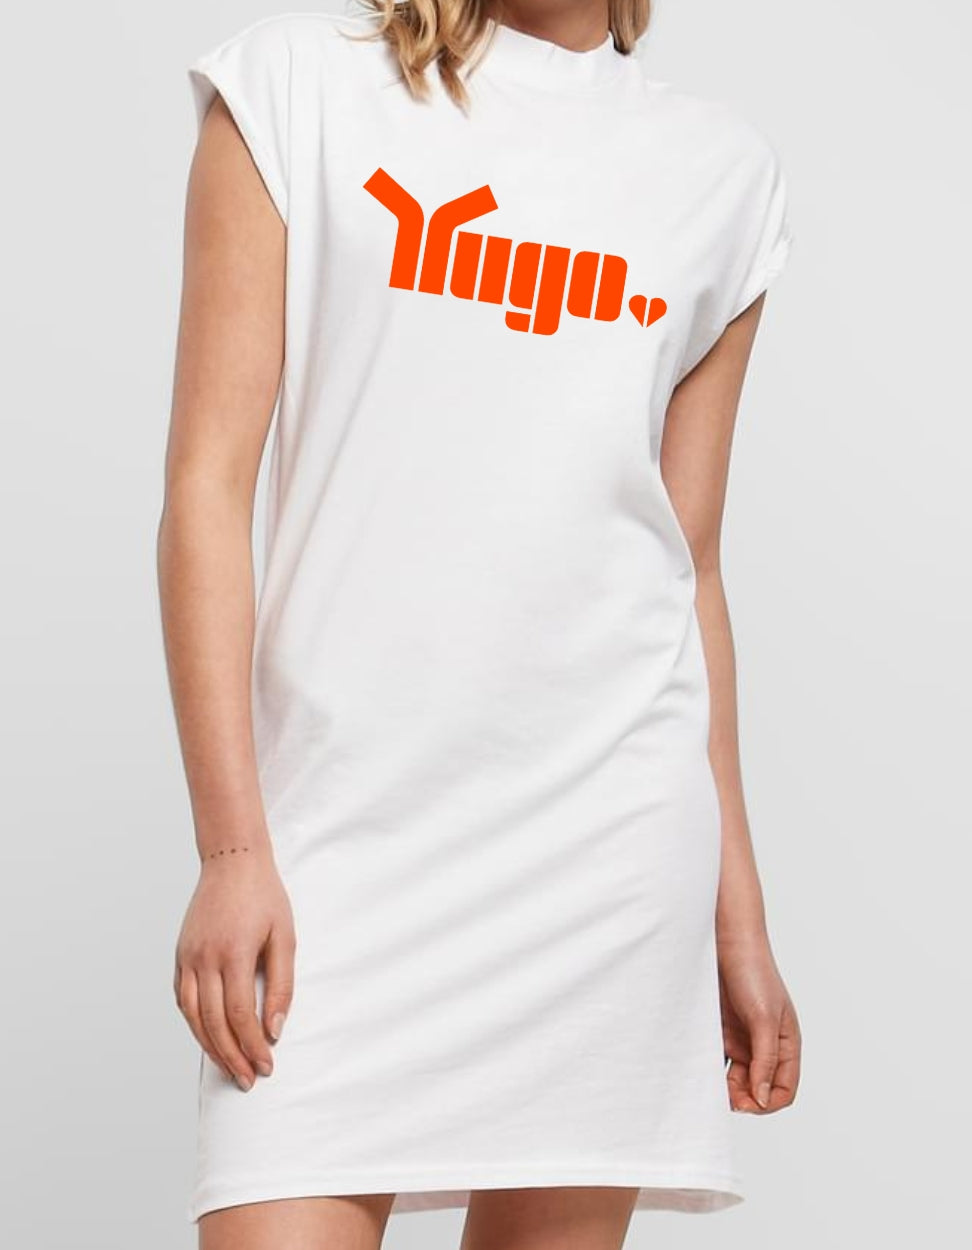 Yugo dress